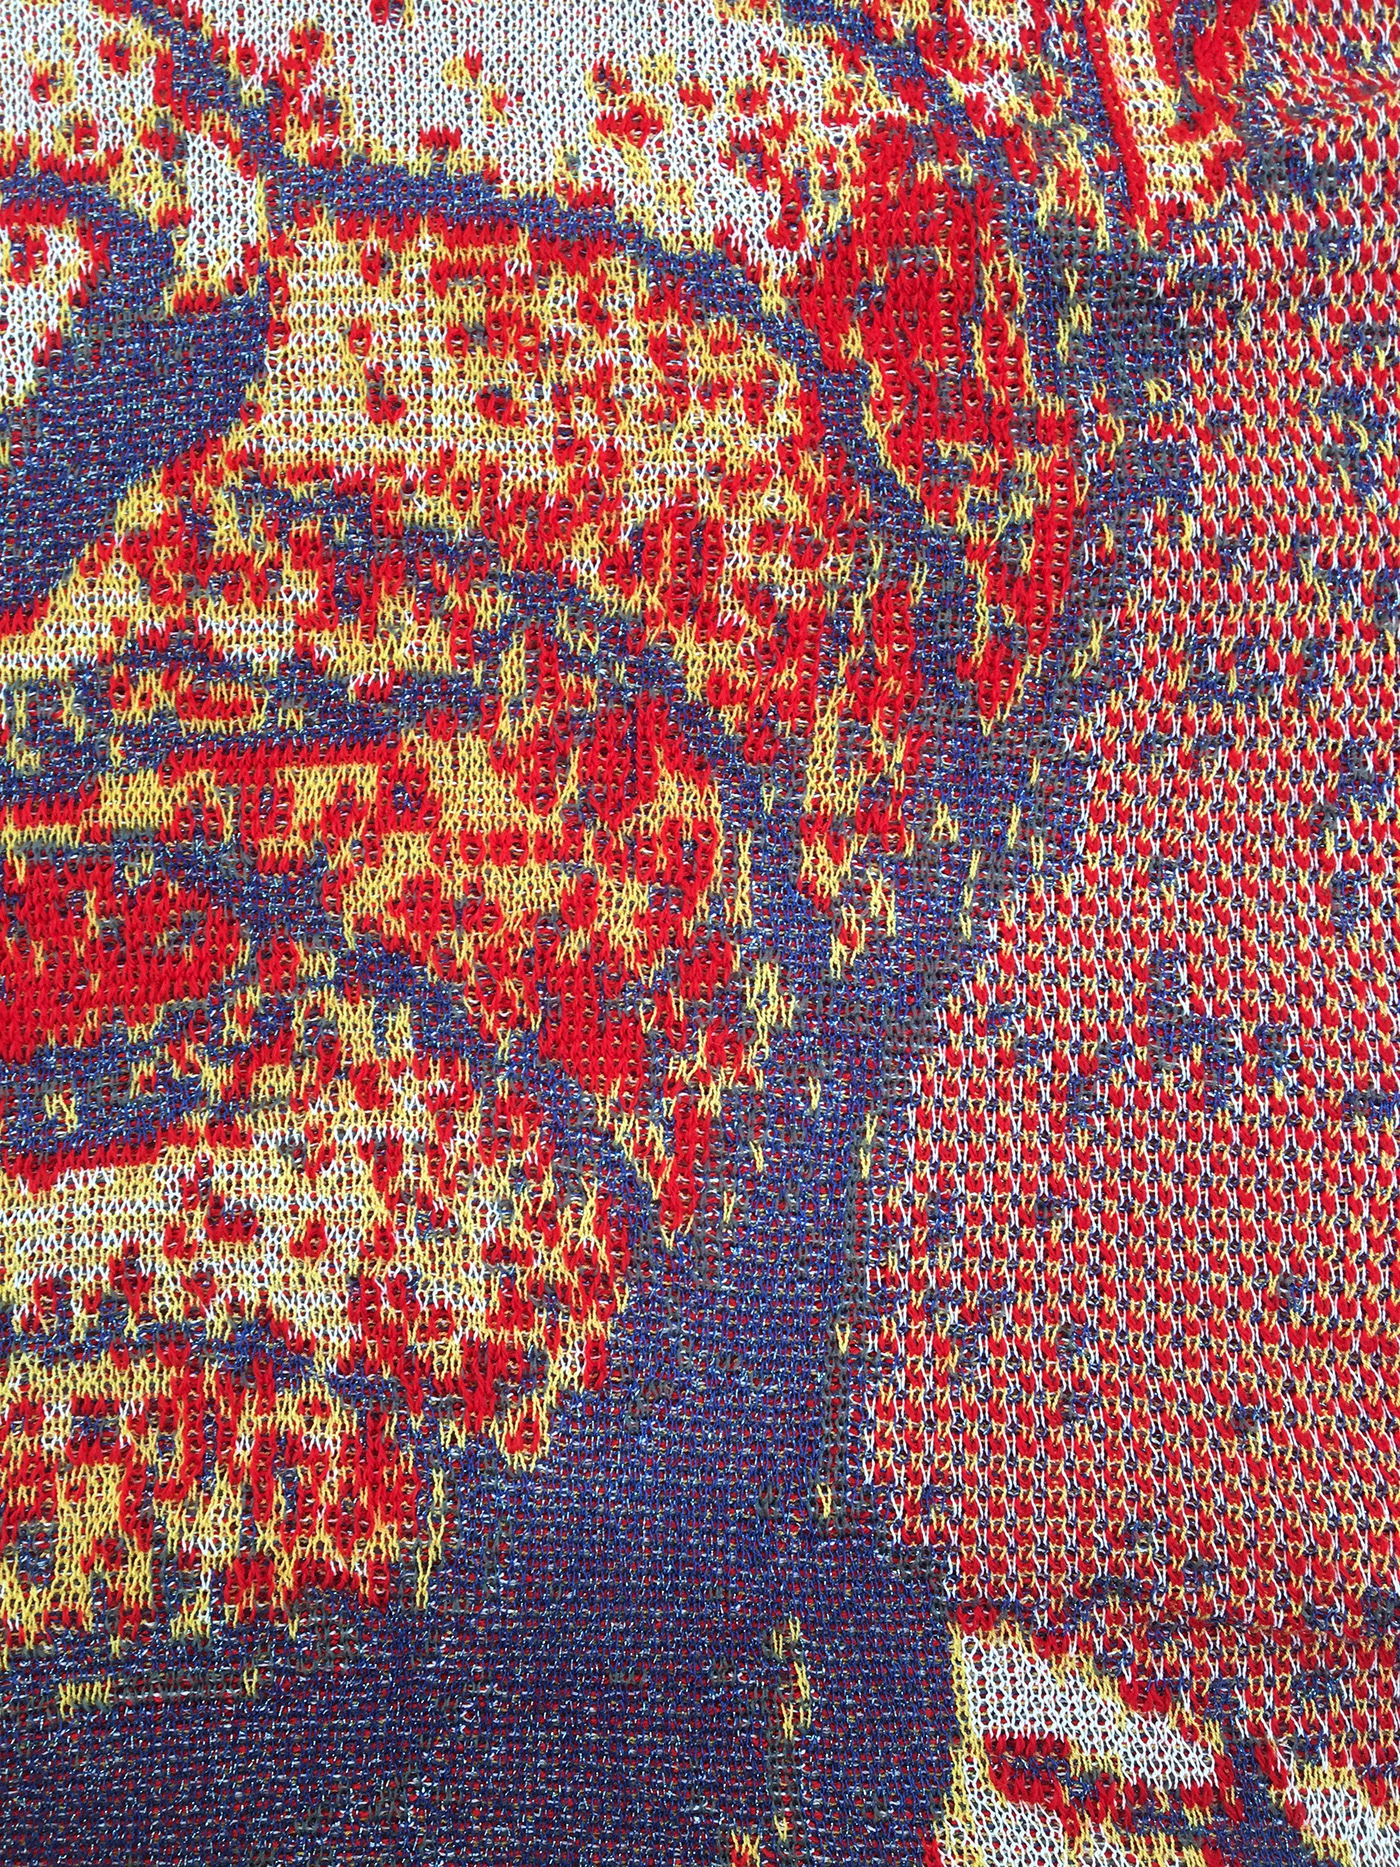 knitting portrait Textiles design surface soft goods knit risd